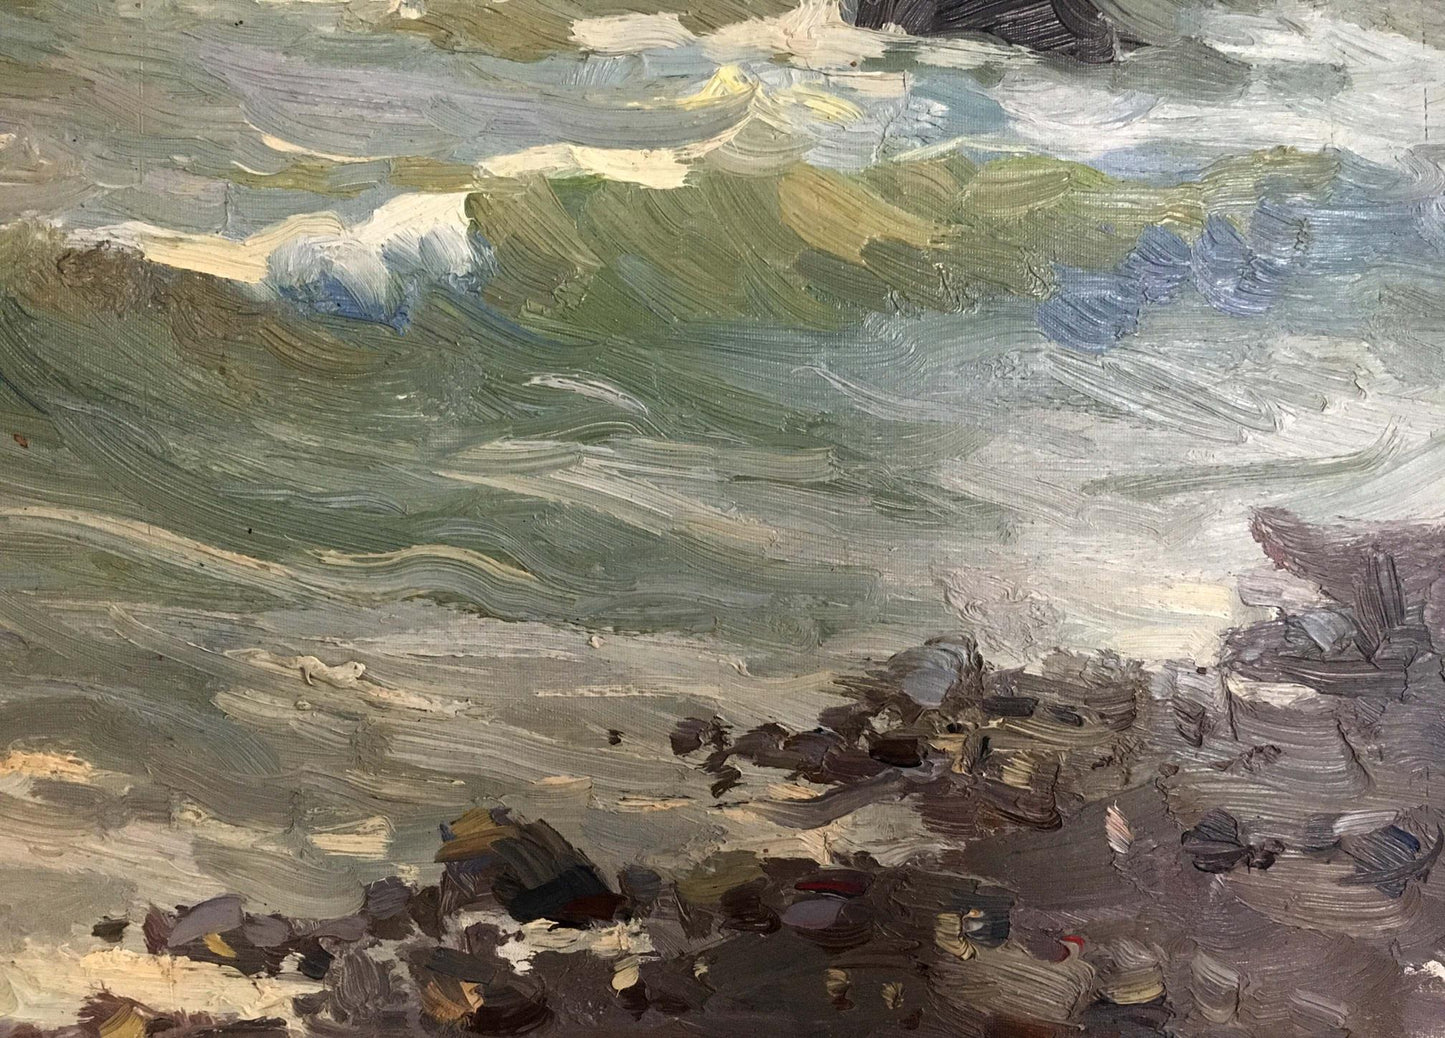 Oil painting Seascape Kolosov Valentin Osipovich